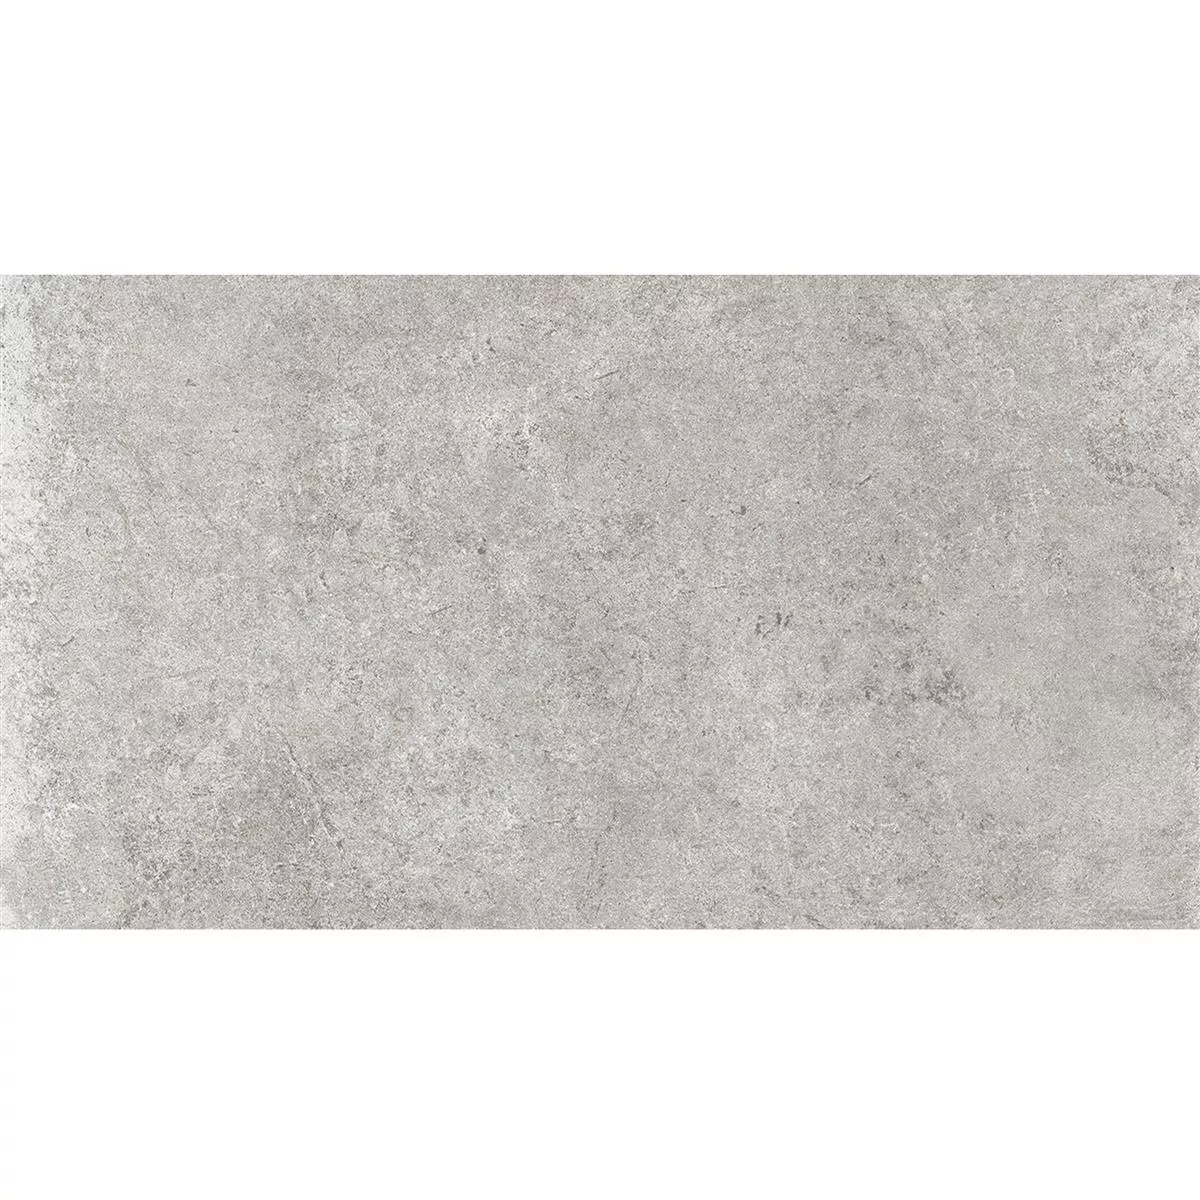 Floor Tiles Colossus Grey 30x60cm